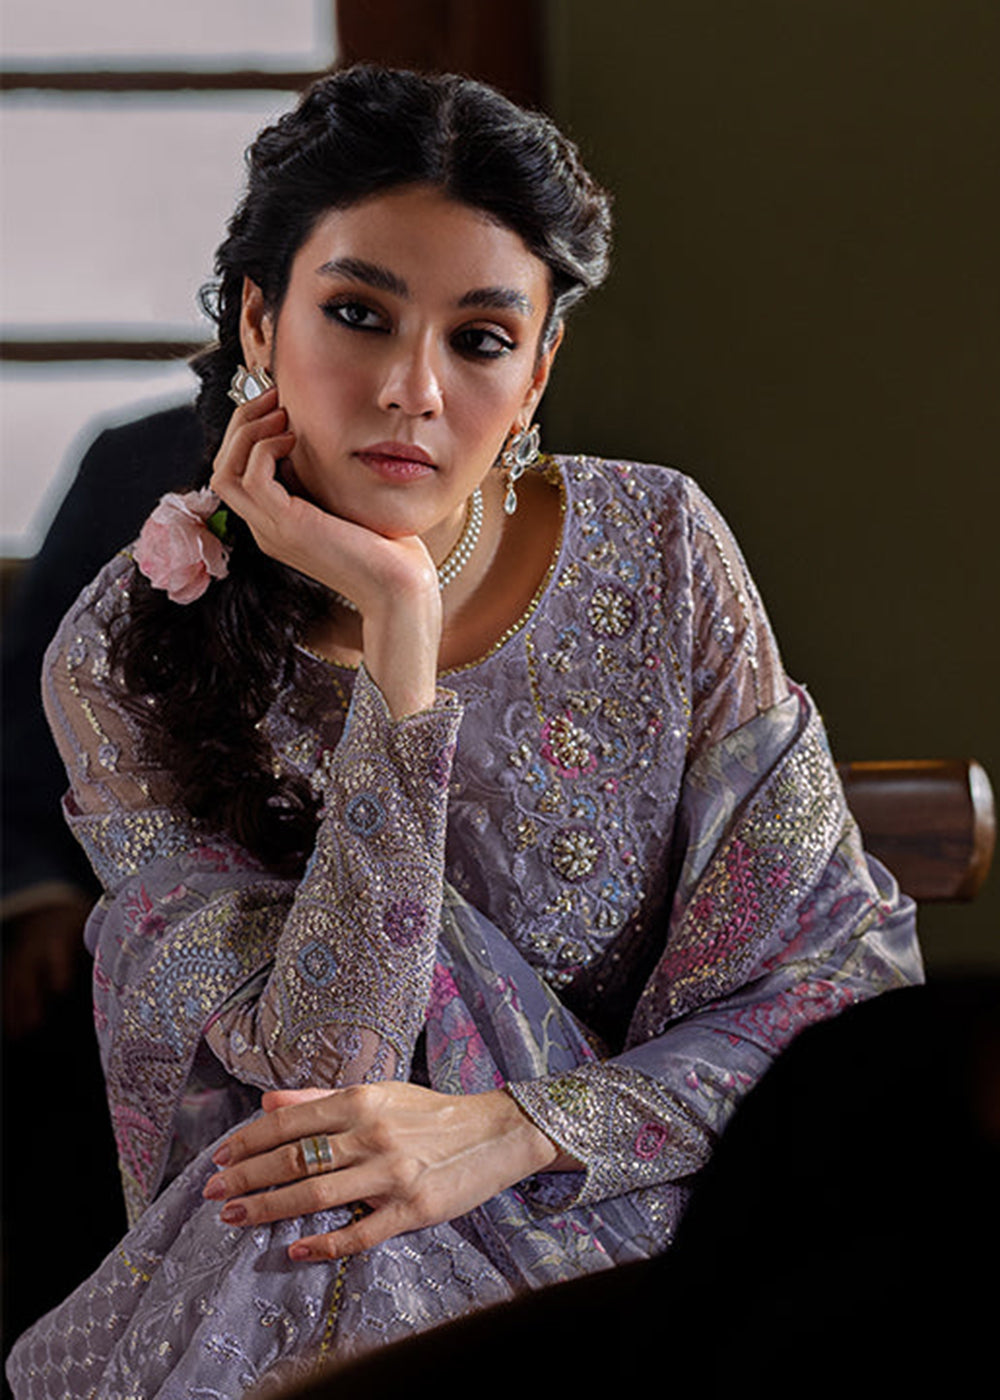 Buy Now Lilac Organza Net Pakistani Suit | Mushq | Qala Kamdaani | Eira Online in USA, UK, Canada & Worldwide at Empress Clothing. 